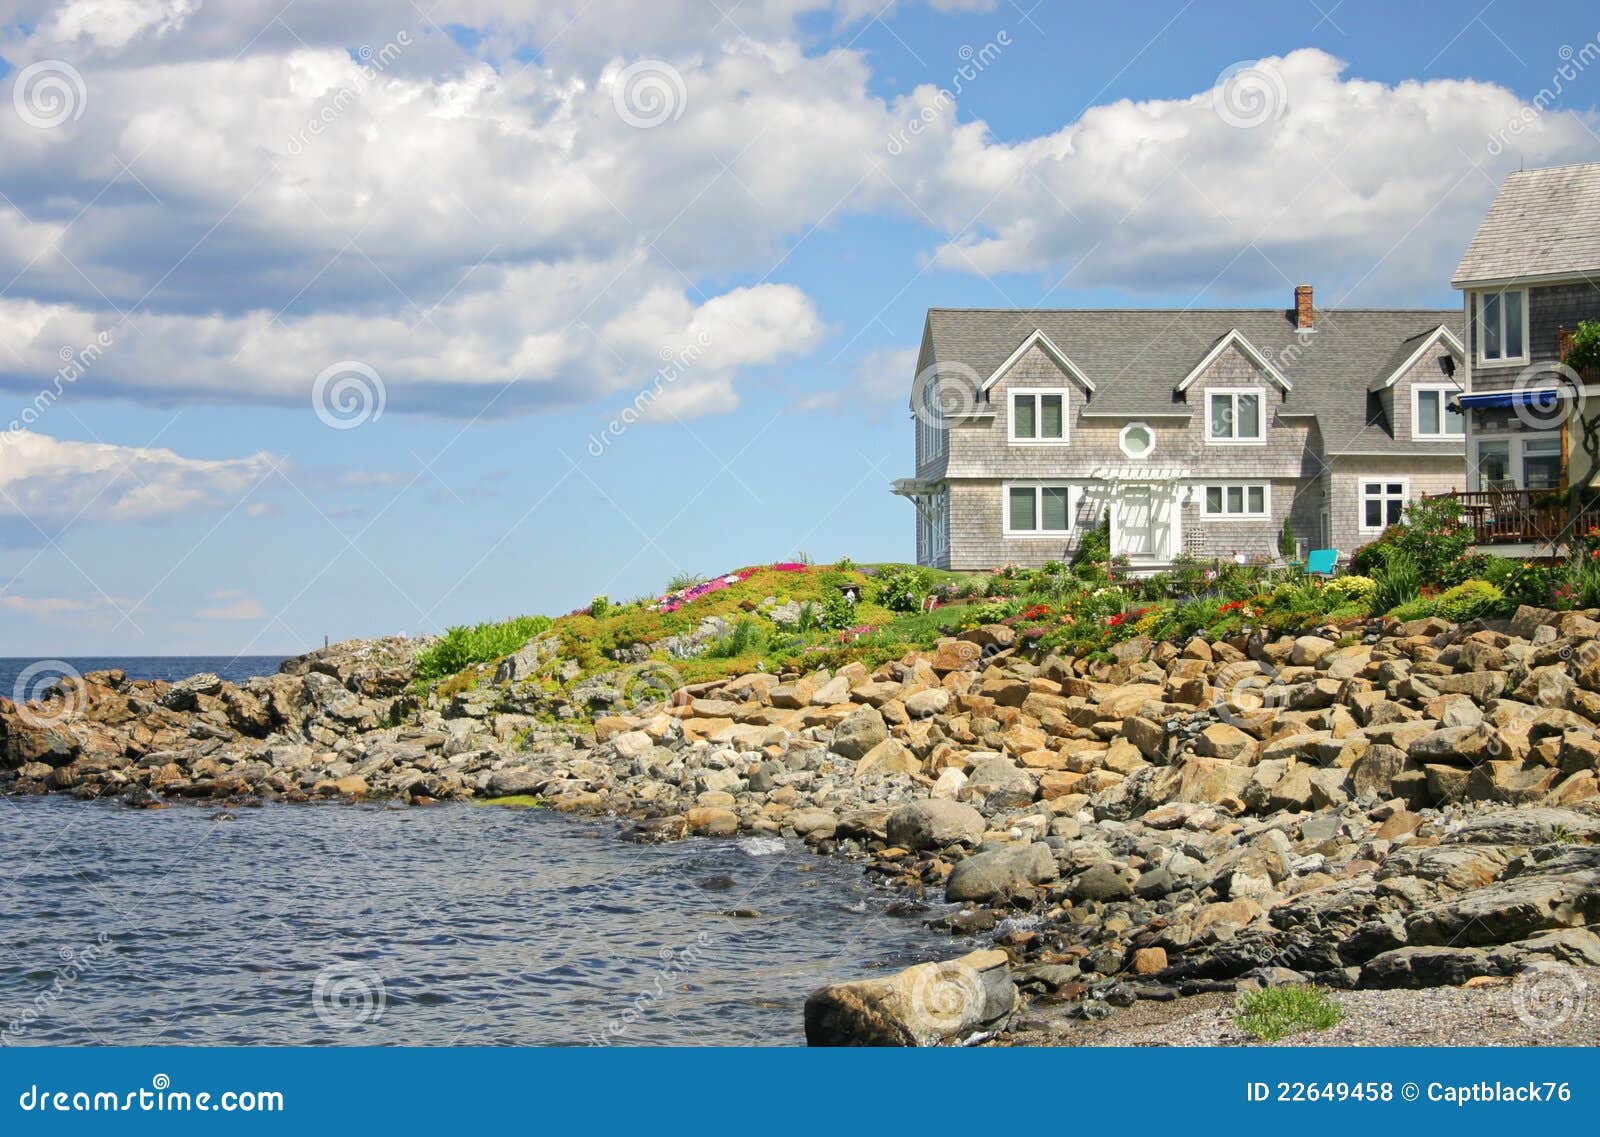 Home Near The Sea Royalty Free Stock Photos - Image: 22649458